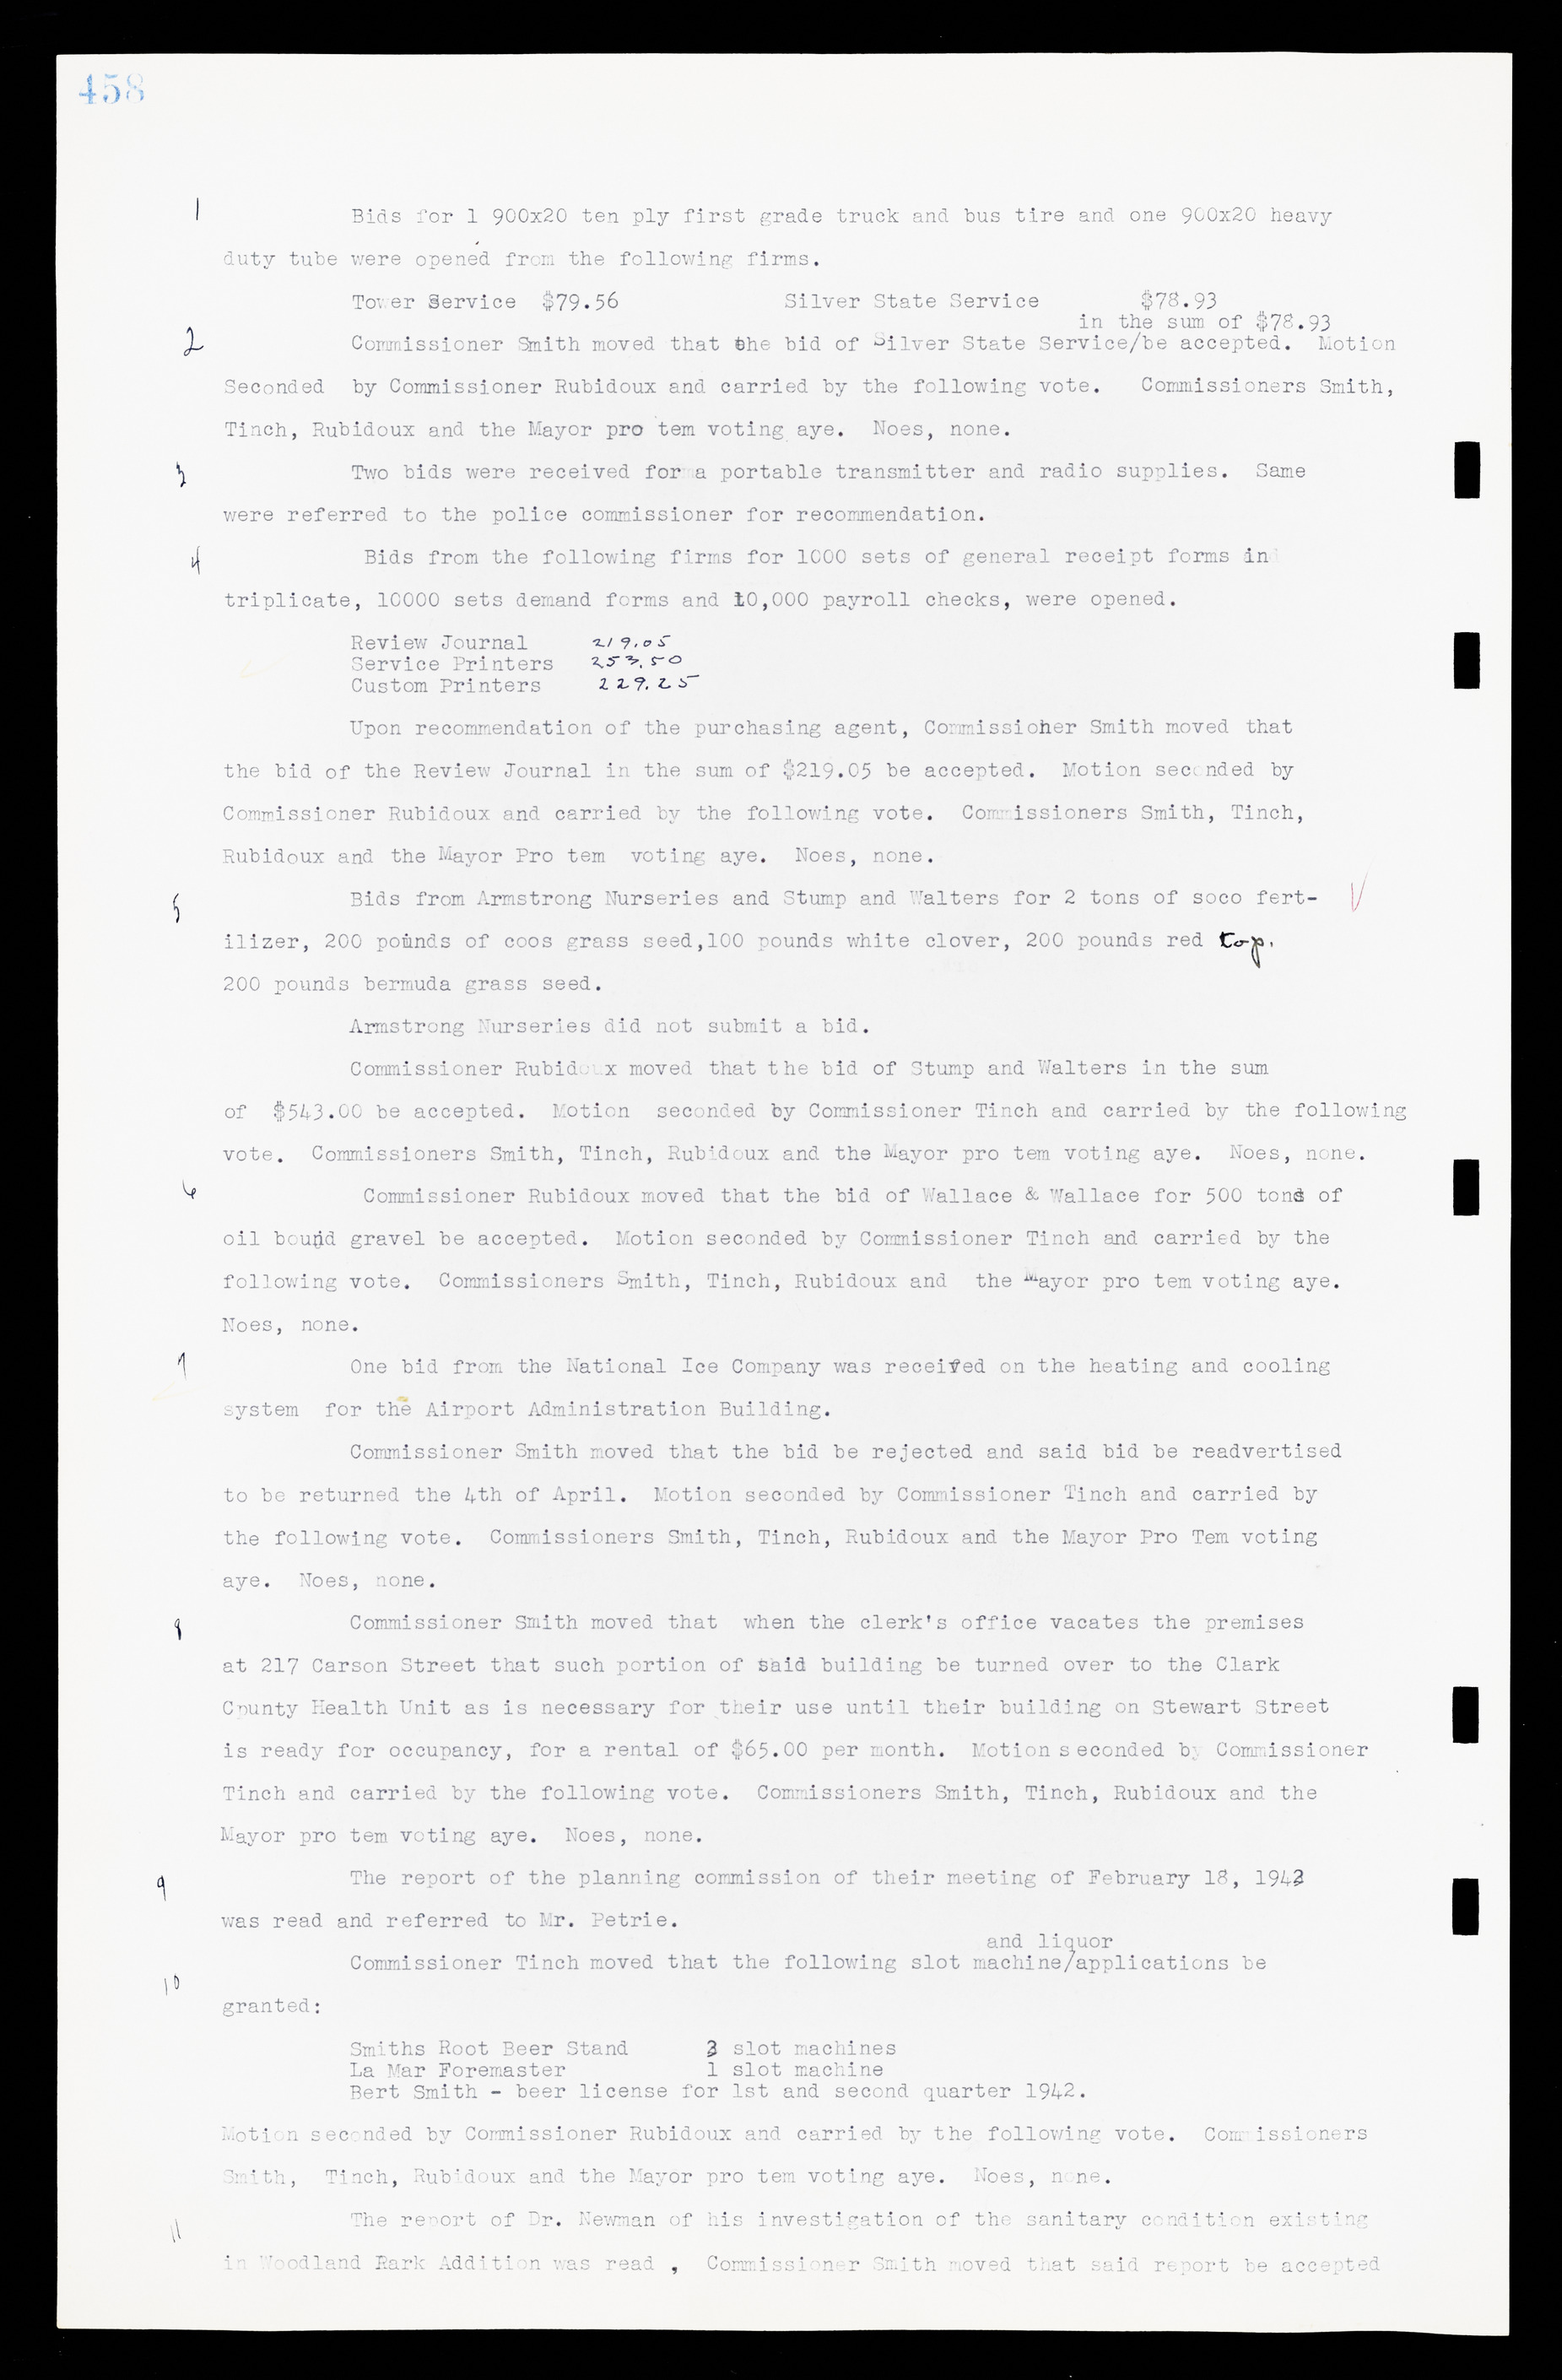 Las Vegas City Commission Minutes, February 17, 1937 to August 4, 1942, lvc000004-486